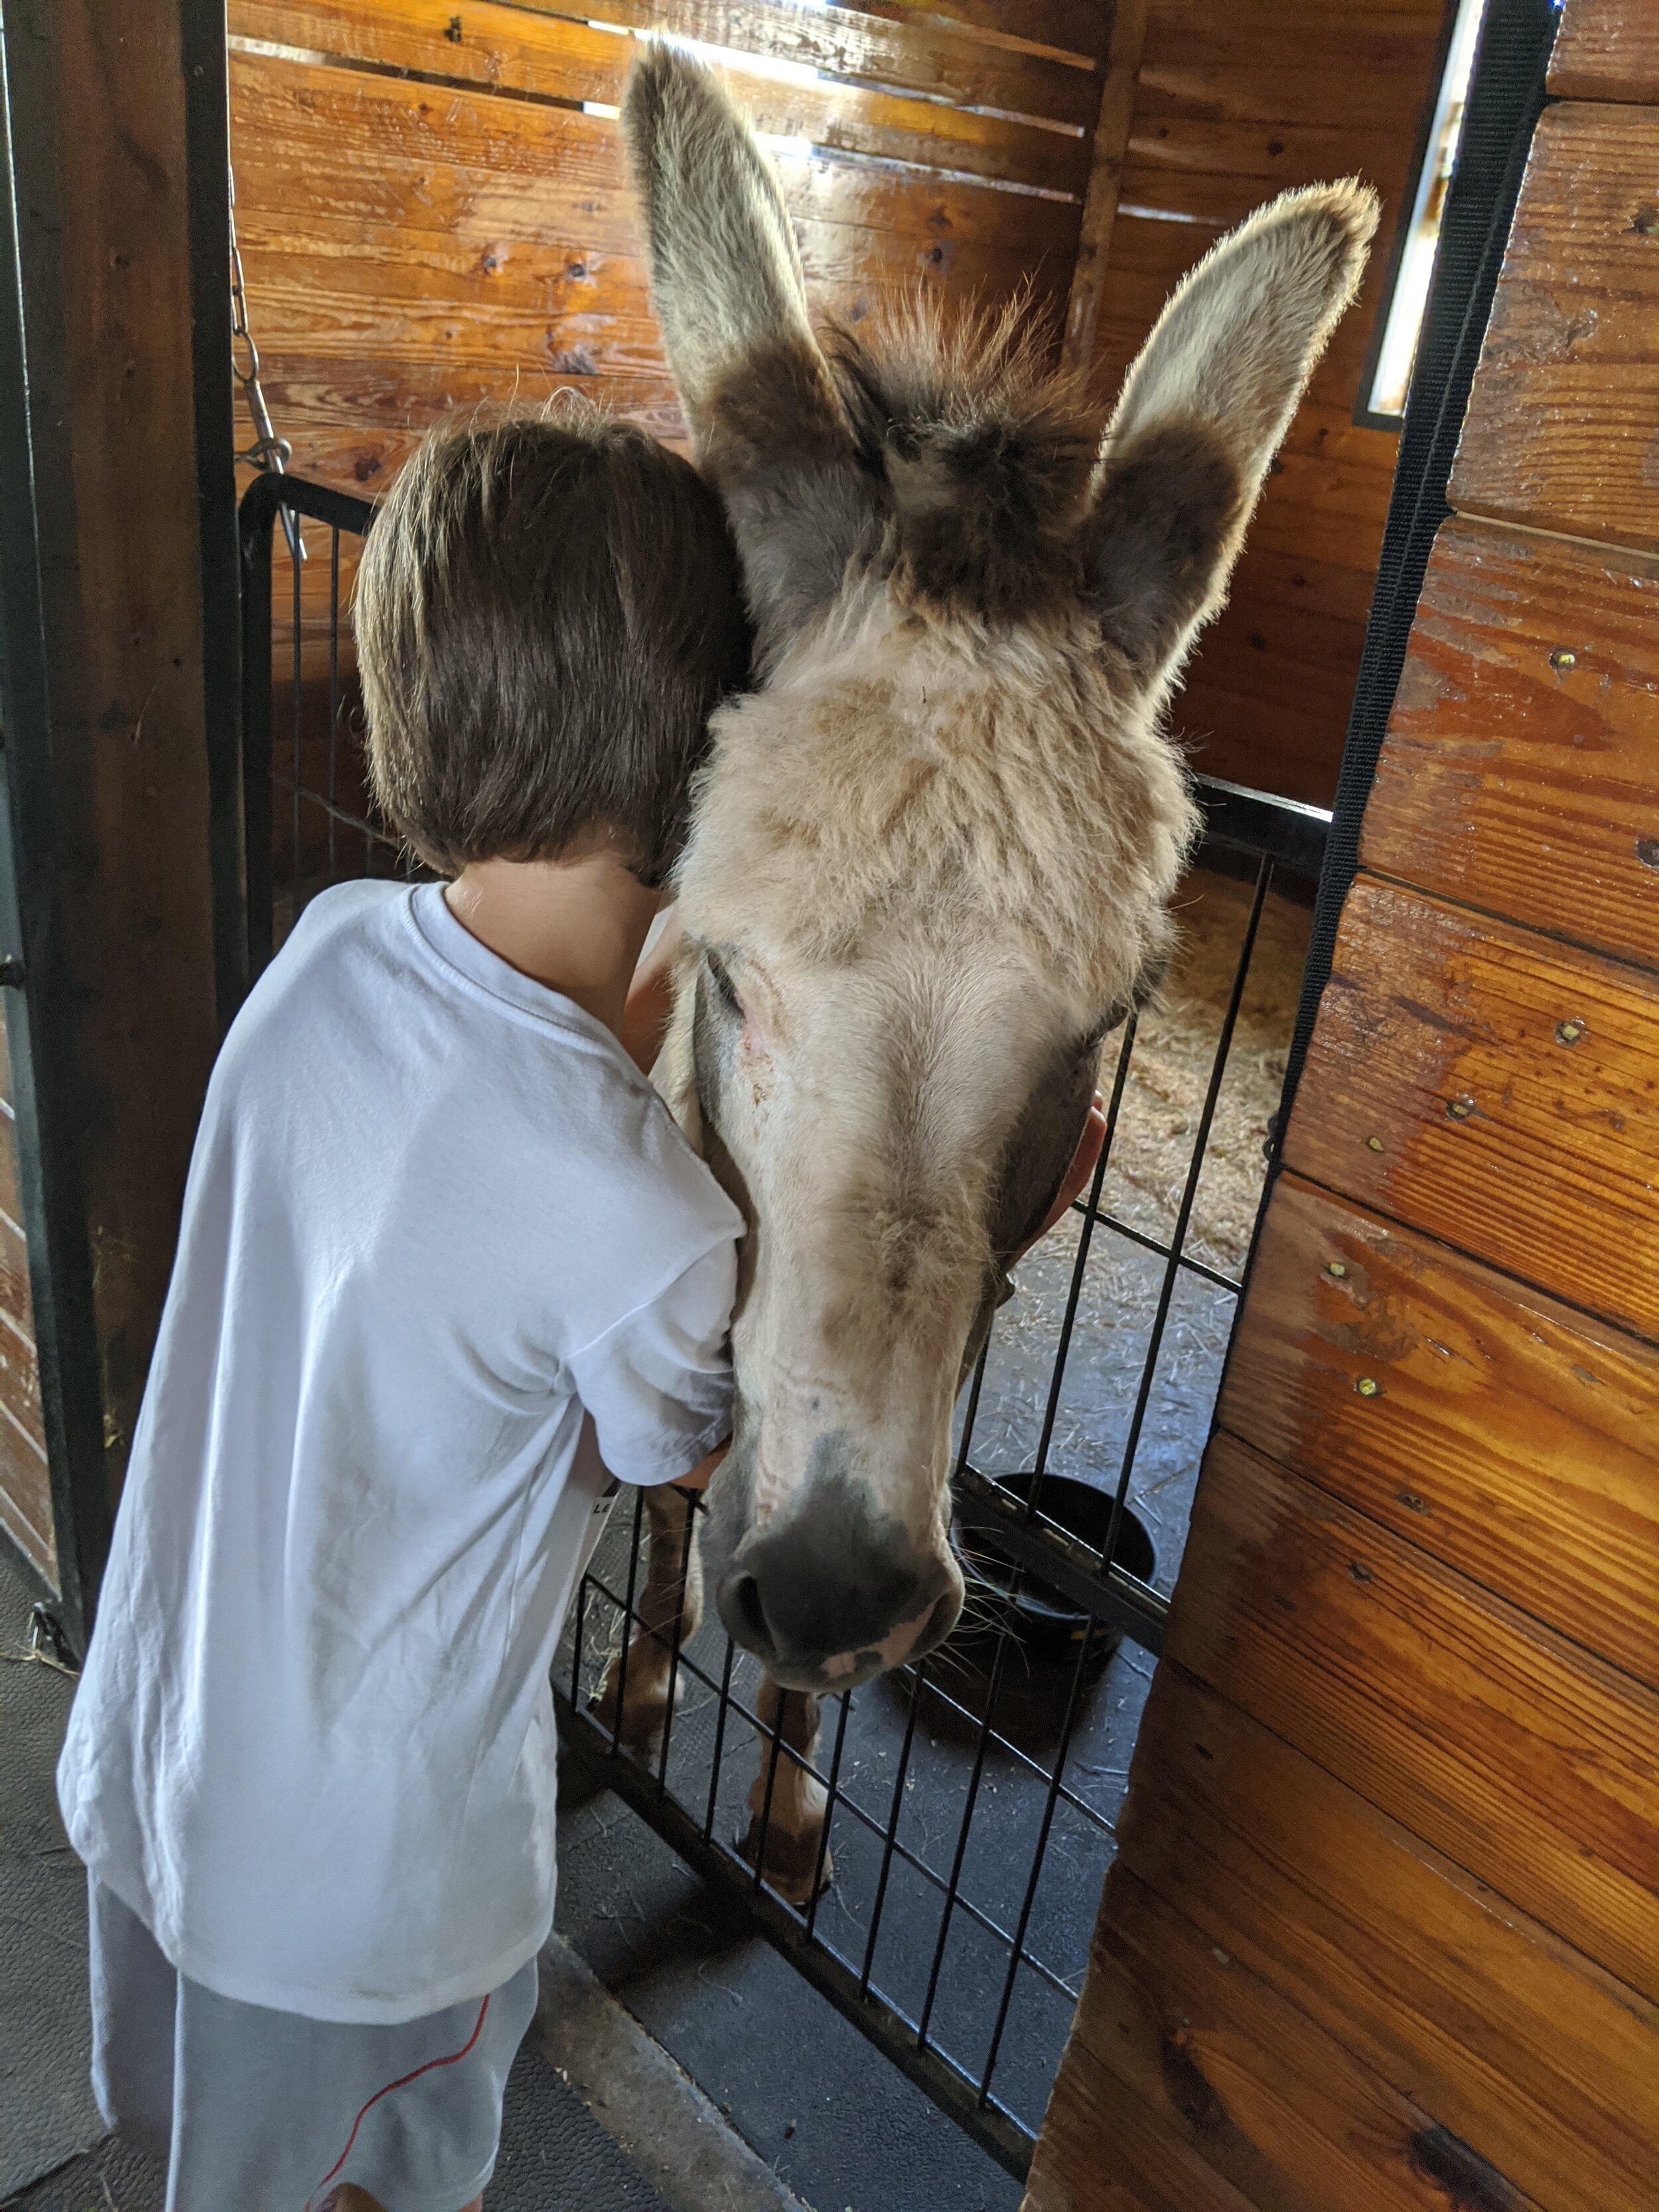 Getting donkey hugs